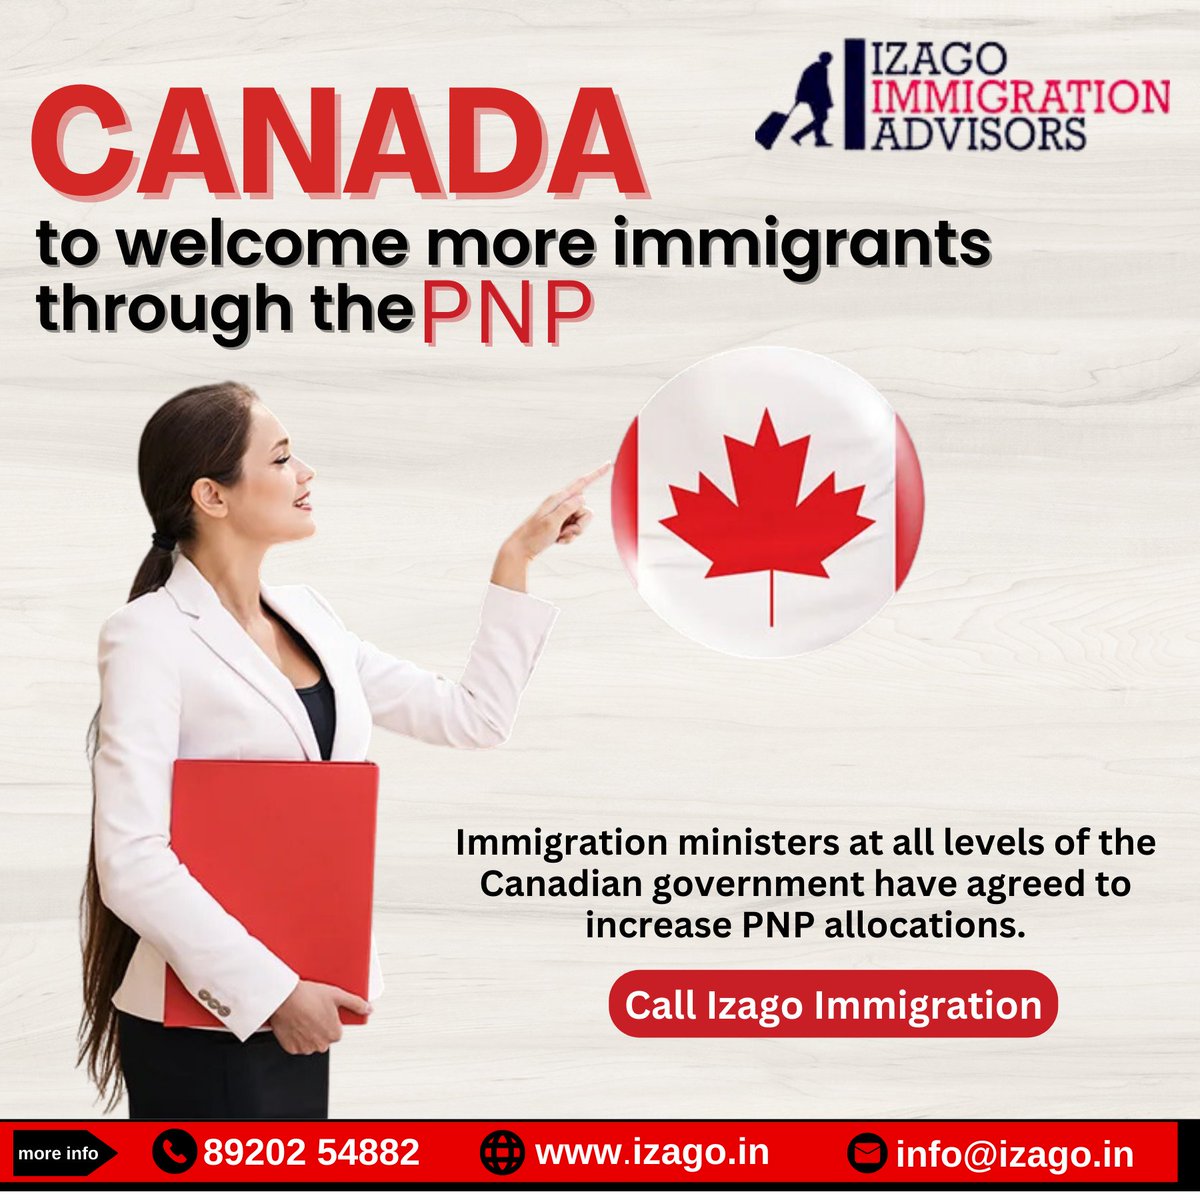 Canada to welcome more immigrants through the PNP
#consultants #immigratetocanada #canada #visaforcanada #skilledimmigration #canadaworkpermit #canadajobs #jobsincanada #immigration #canadapermanentresidencevisa #canada #nationwidevisas #izago #immigration #izago #immigration